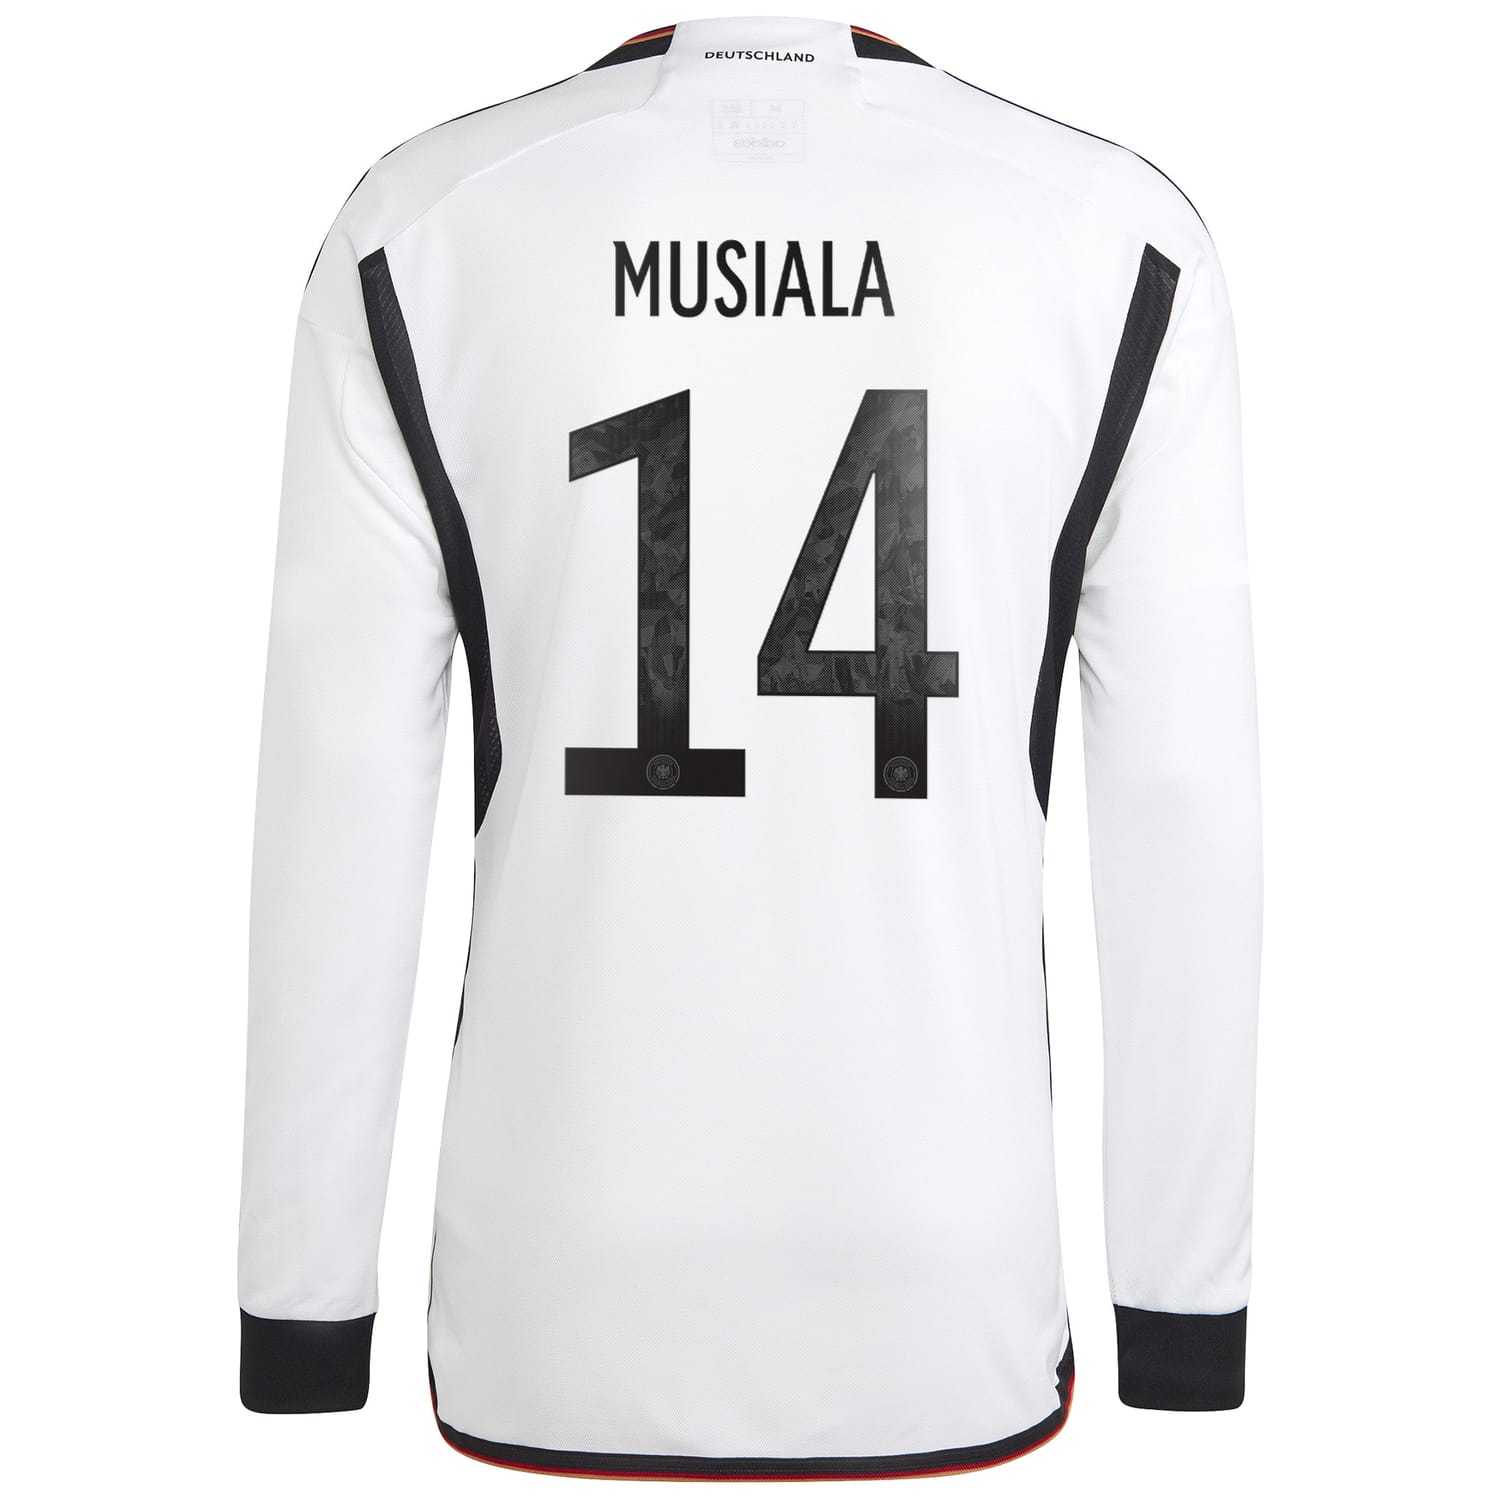 Germany National Team Jersey Shirt Long Sleeve White 2022-23 player Jamal Musiala printing for Men